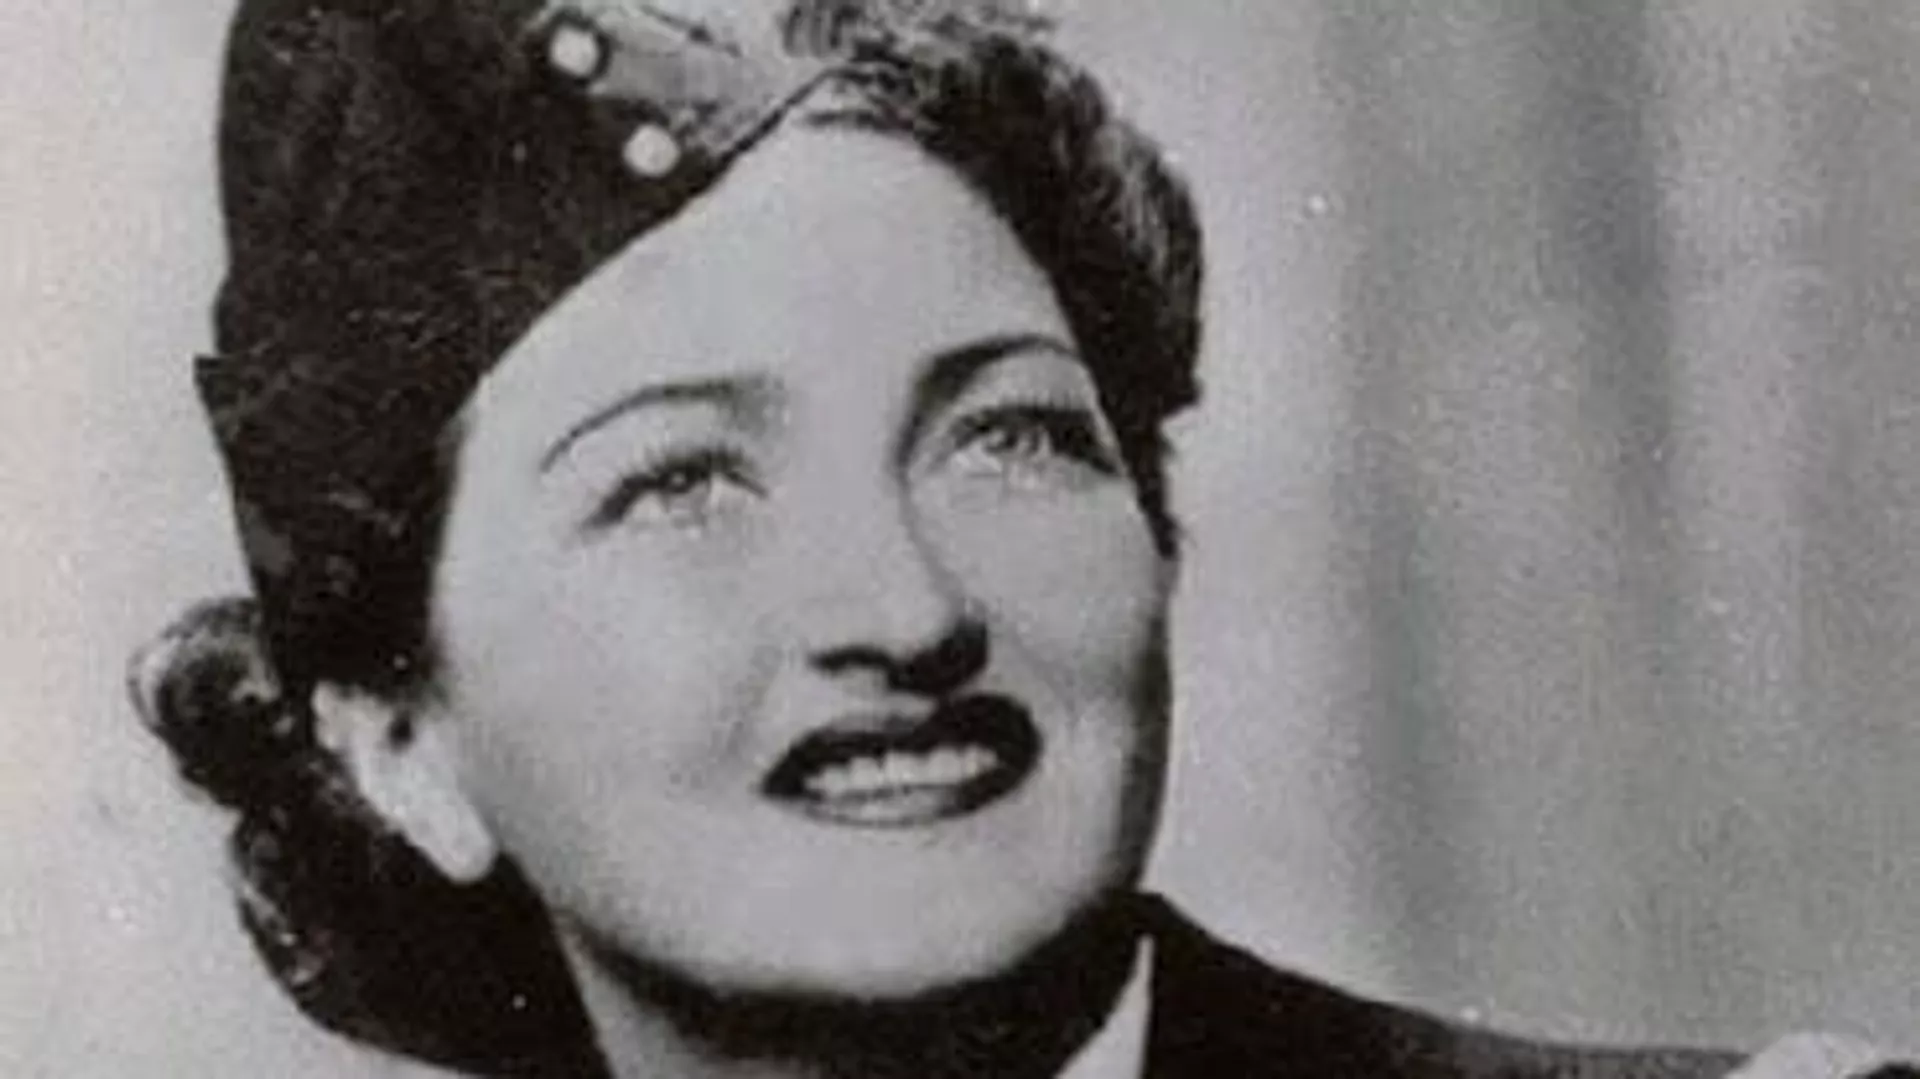  Margot Duhalde, la piloto chilena que combatió a los nazis en la Segunda Guerra Mundial